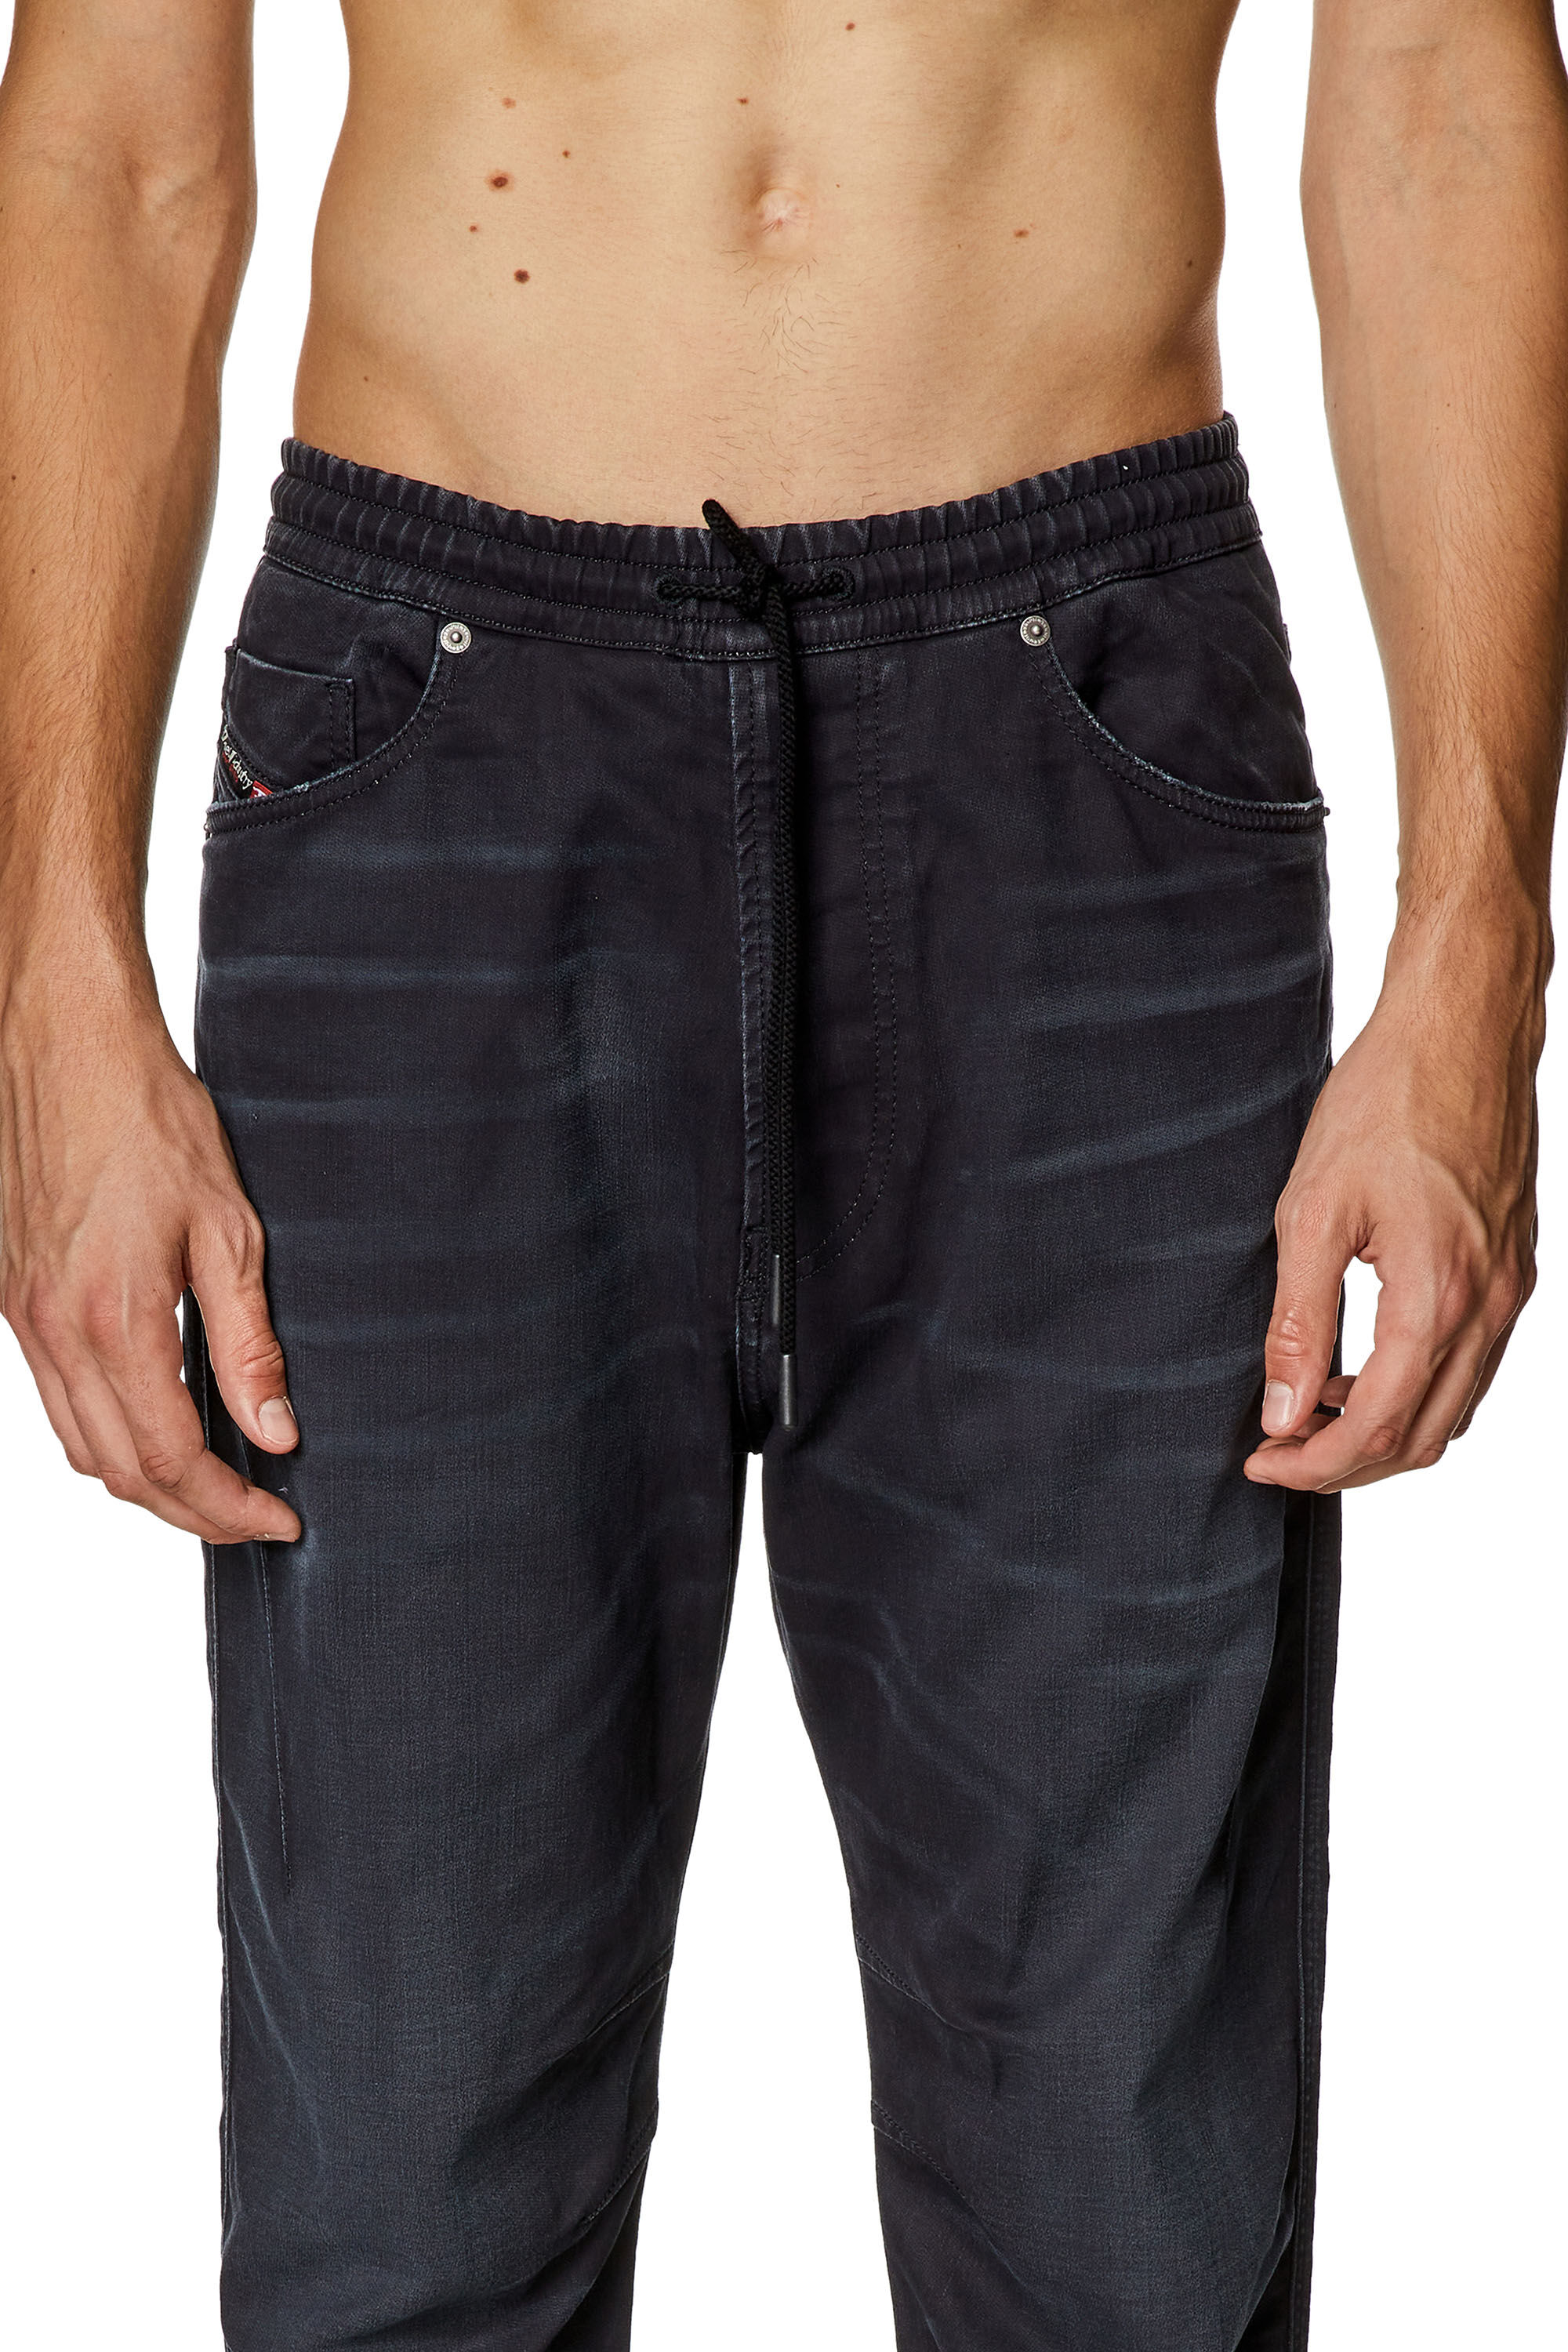 Men's Tapered Jeans | Black/Dark grey | Diesel 2040 D-Amage Joggjeans®